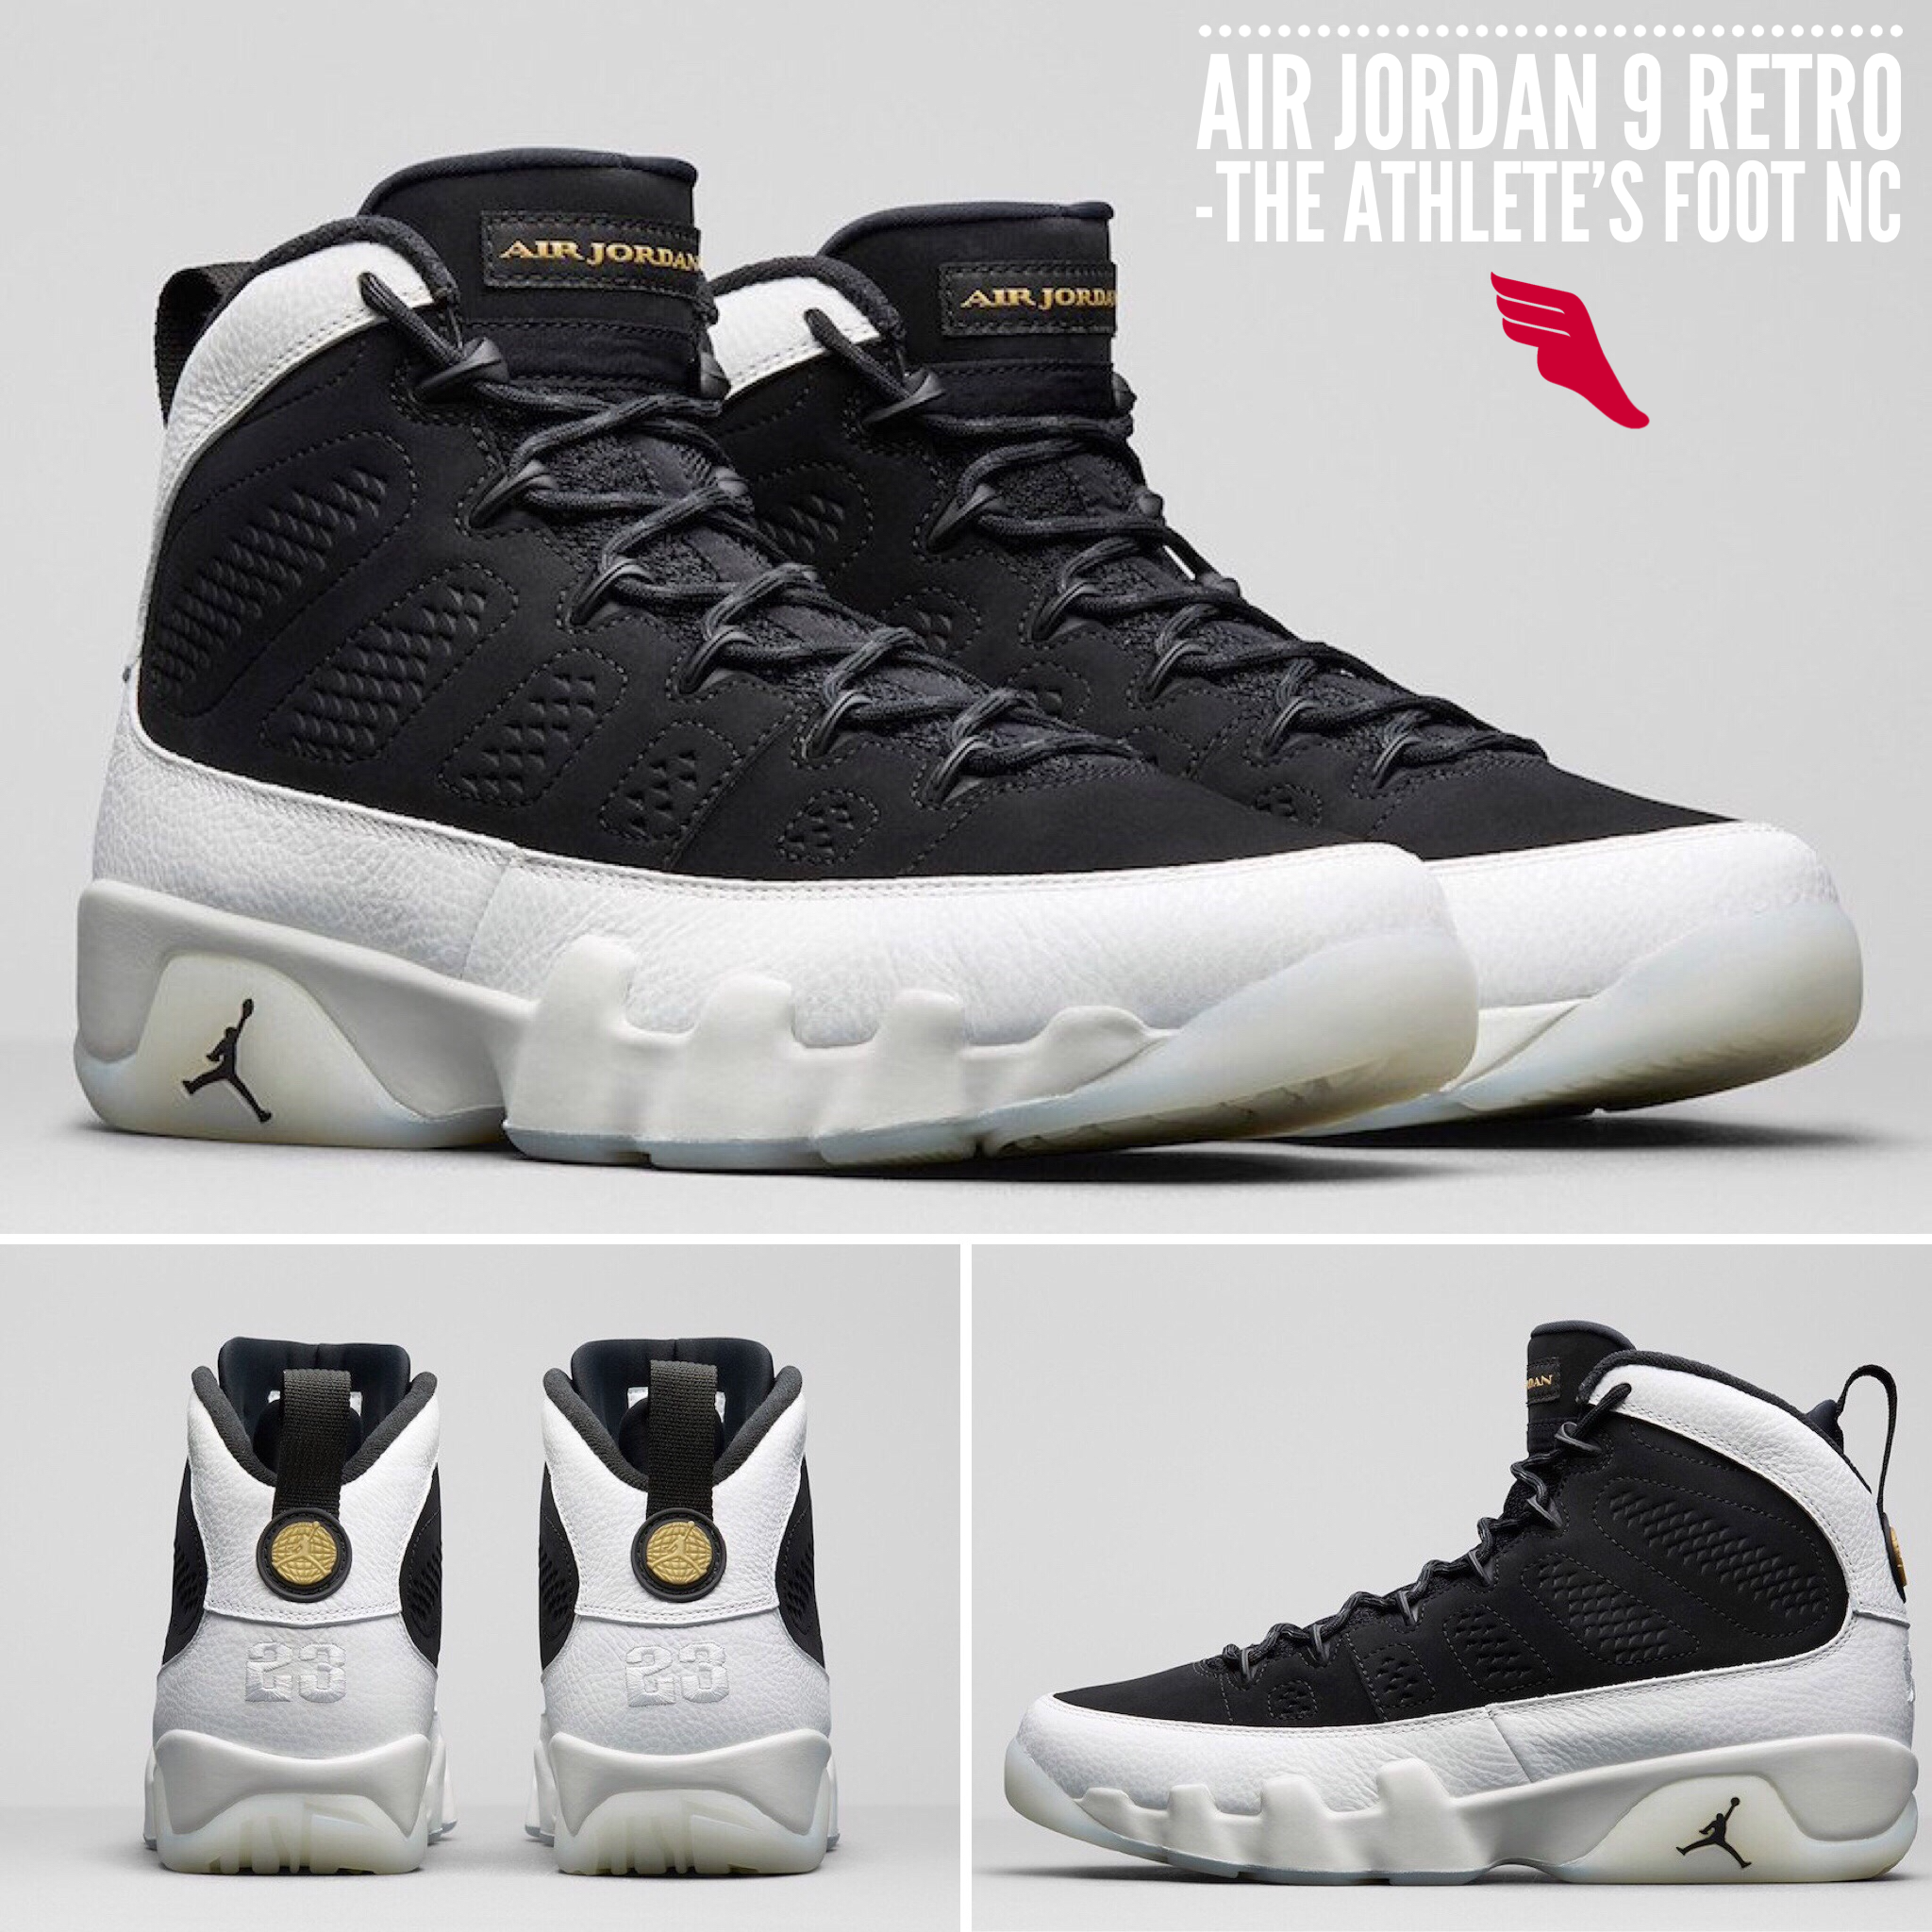 Inodoro Hundimiento para ver Air Jordan 9 Retro l The Athlete's Foot North Carolina Stores